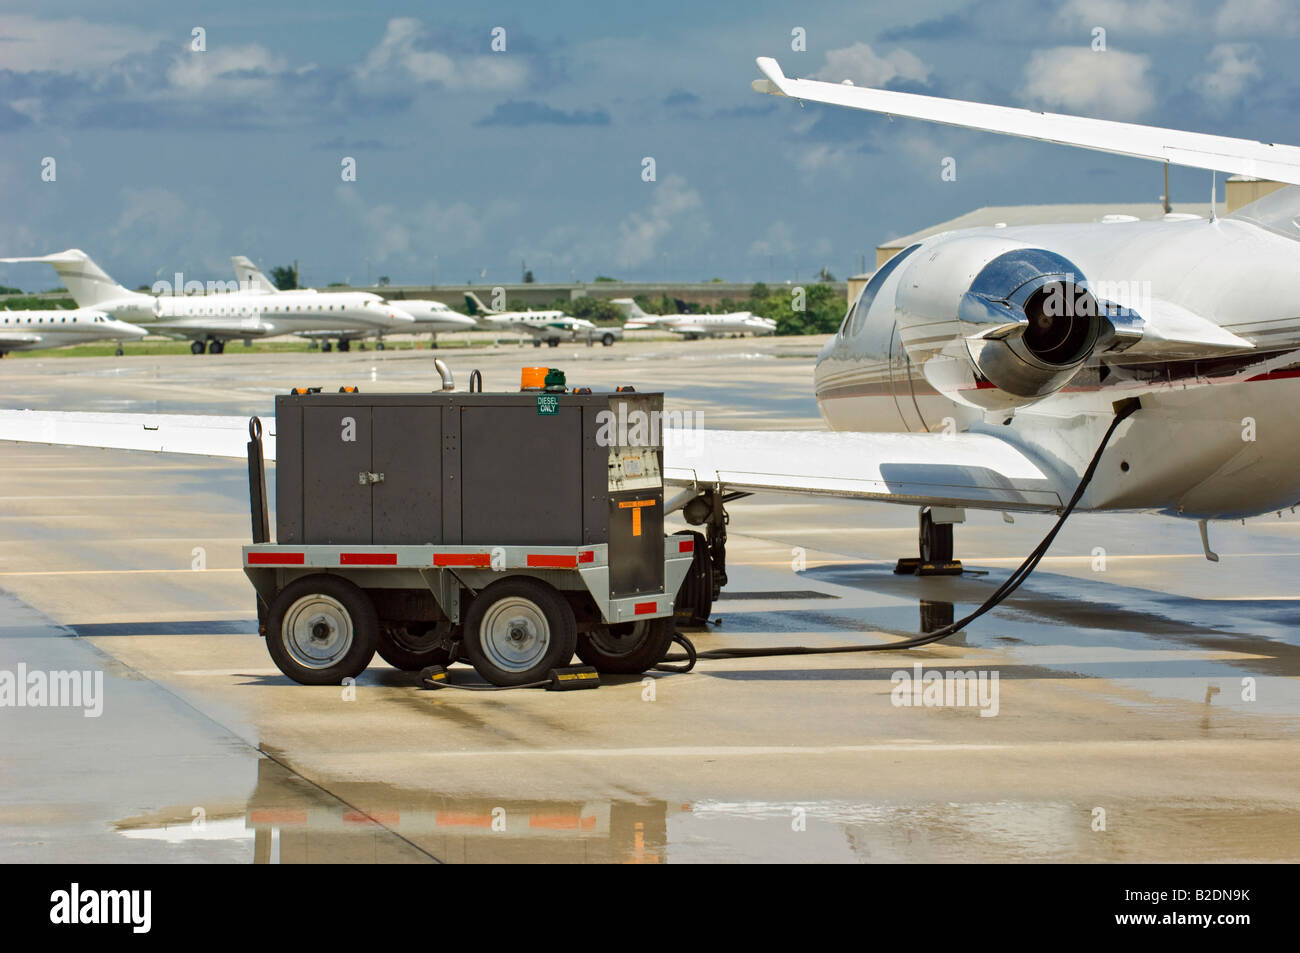 airport runway landing strip tarmac touchdown markers marking arrow direction Stock Photo